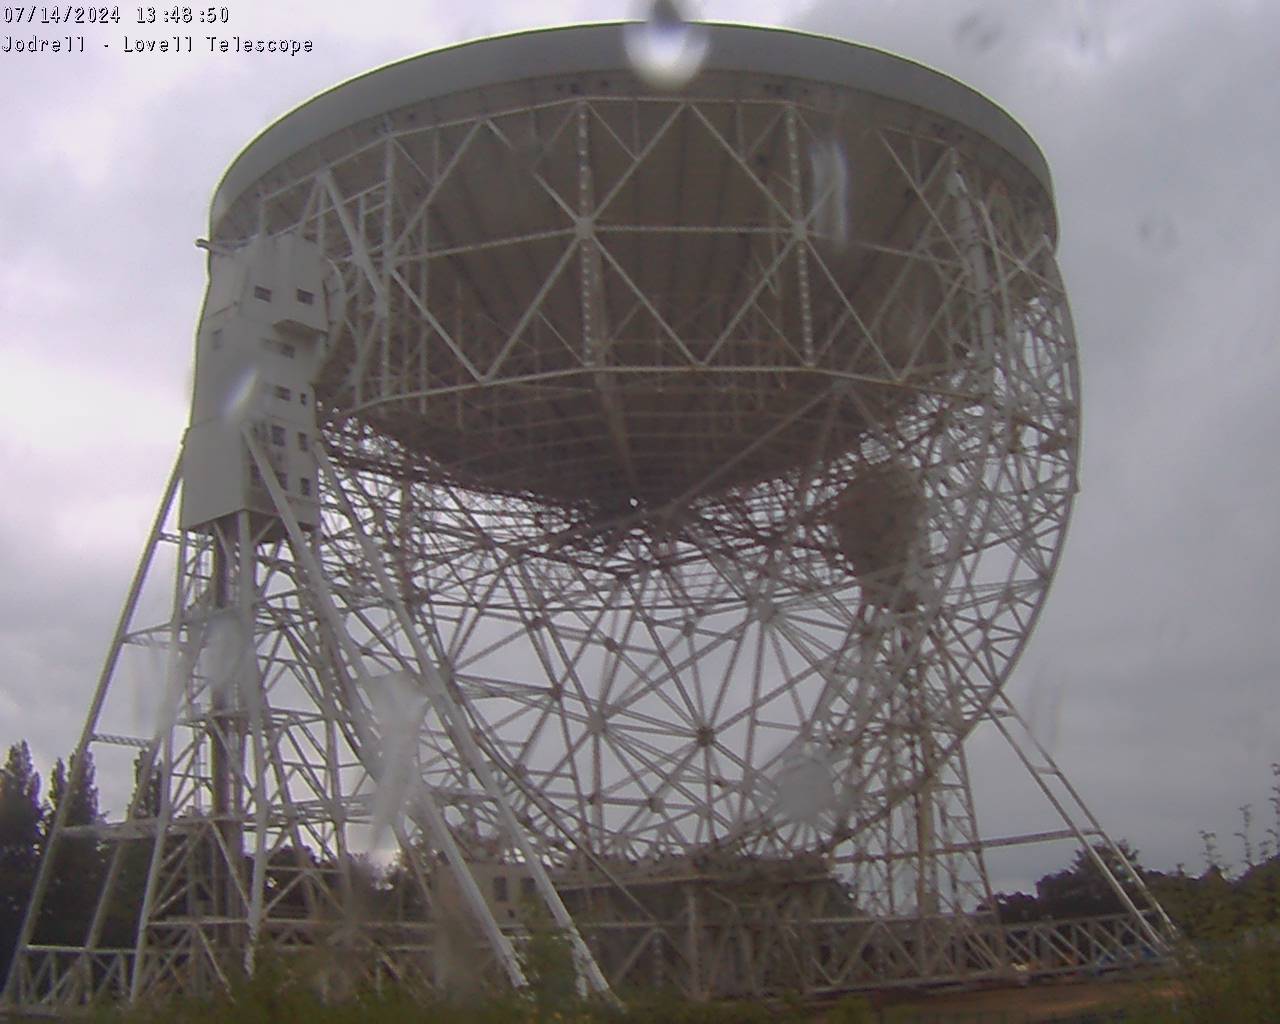 Jodrell Bank Observatory Thu. 13:49